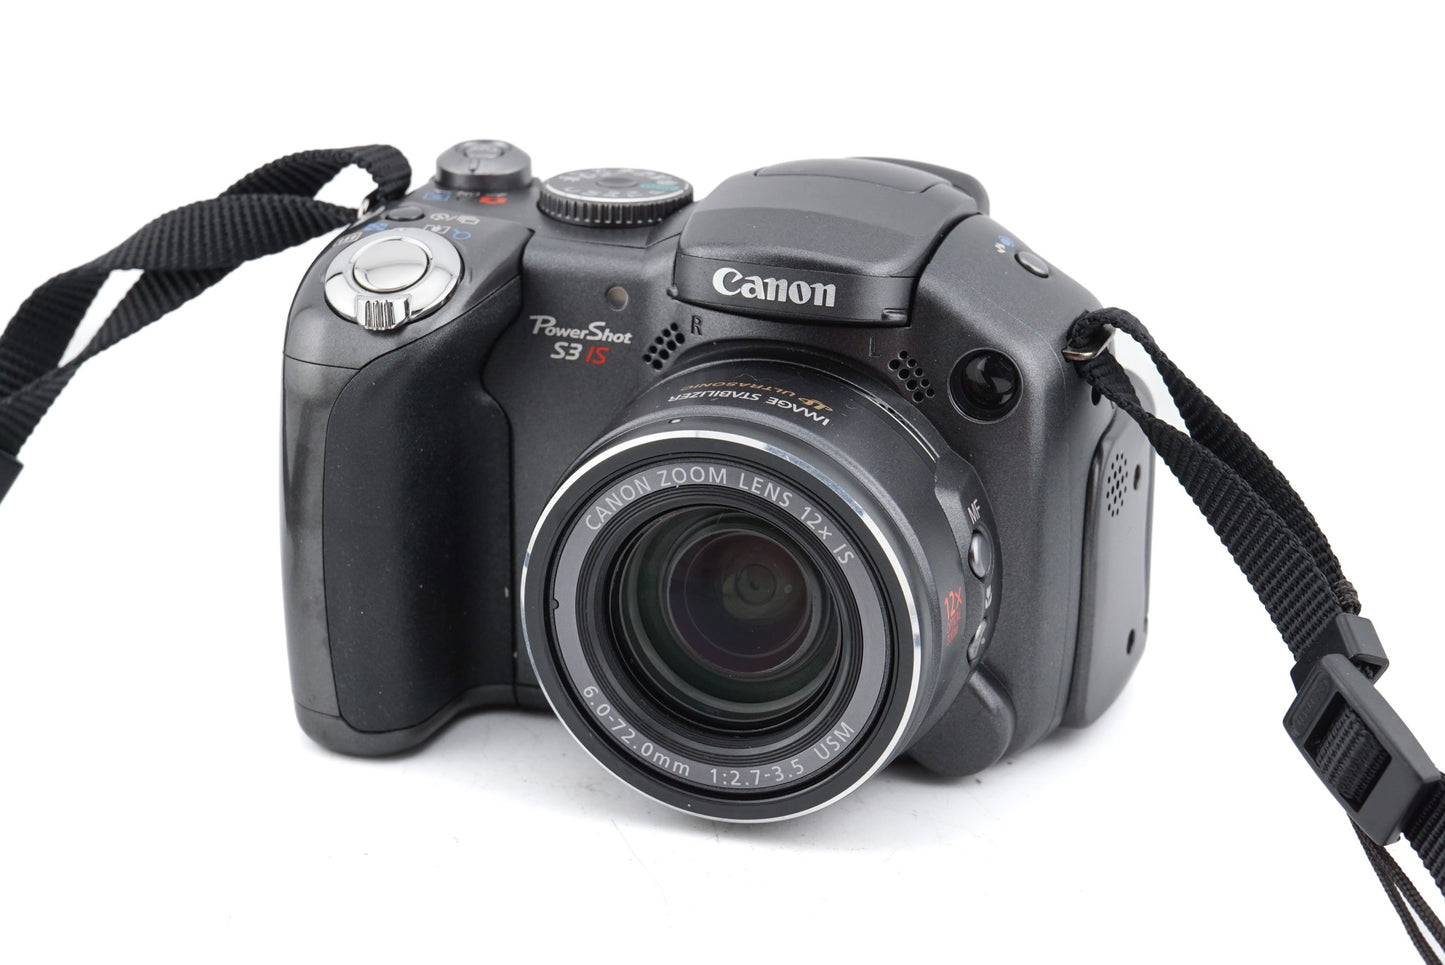 Canon PowerShot S3 IS - Camera